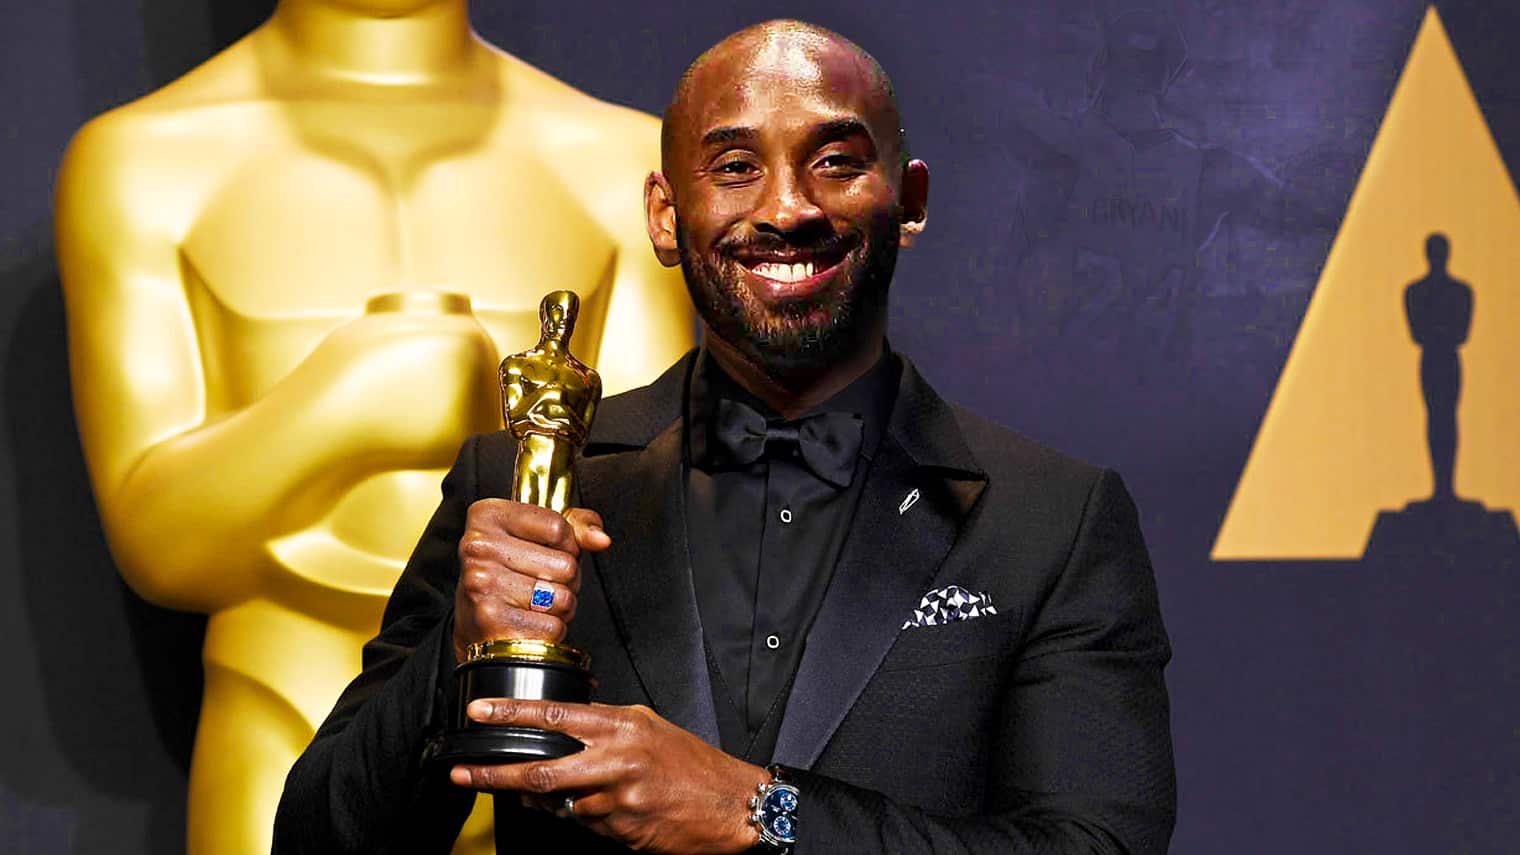 Oscar 2020: durante la cerimonia verrà ricordato Kobe Bryant